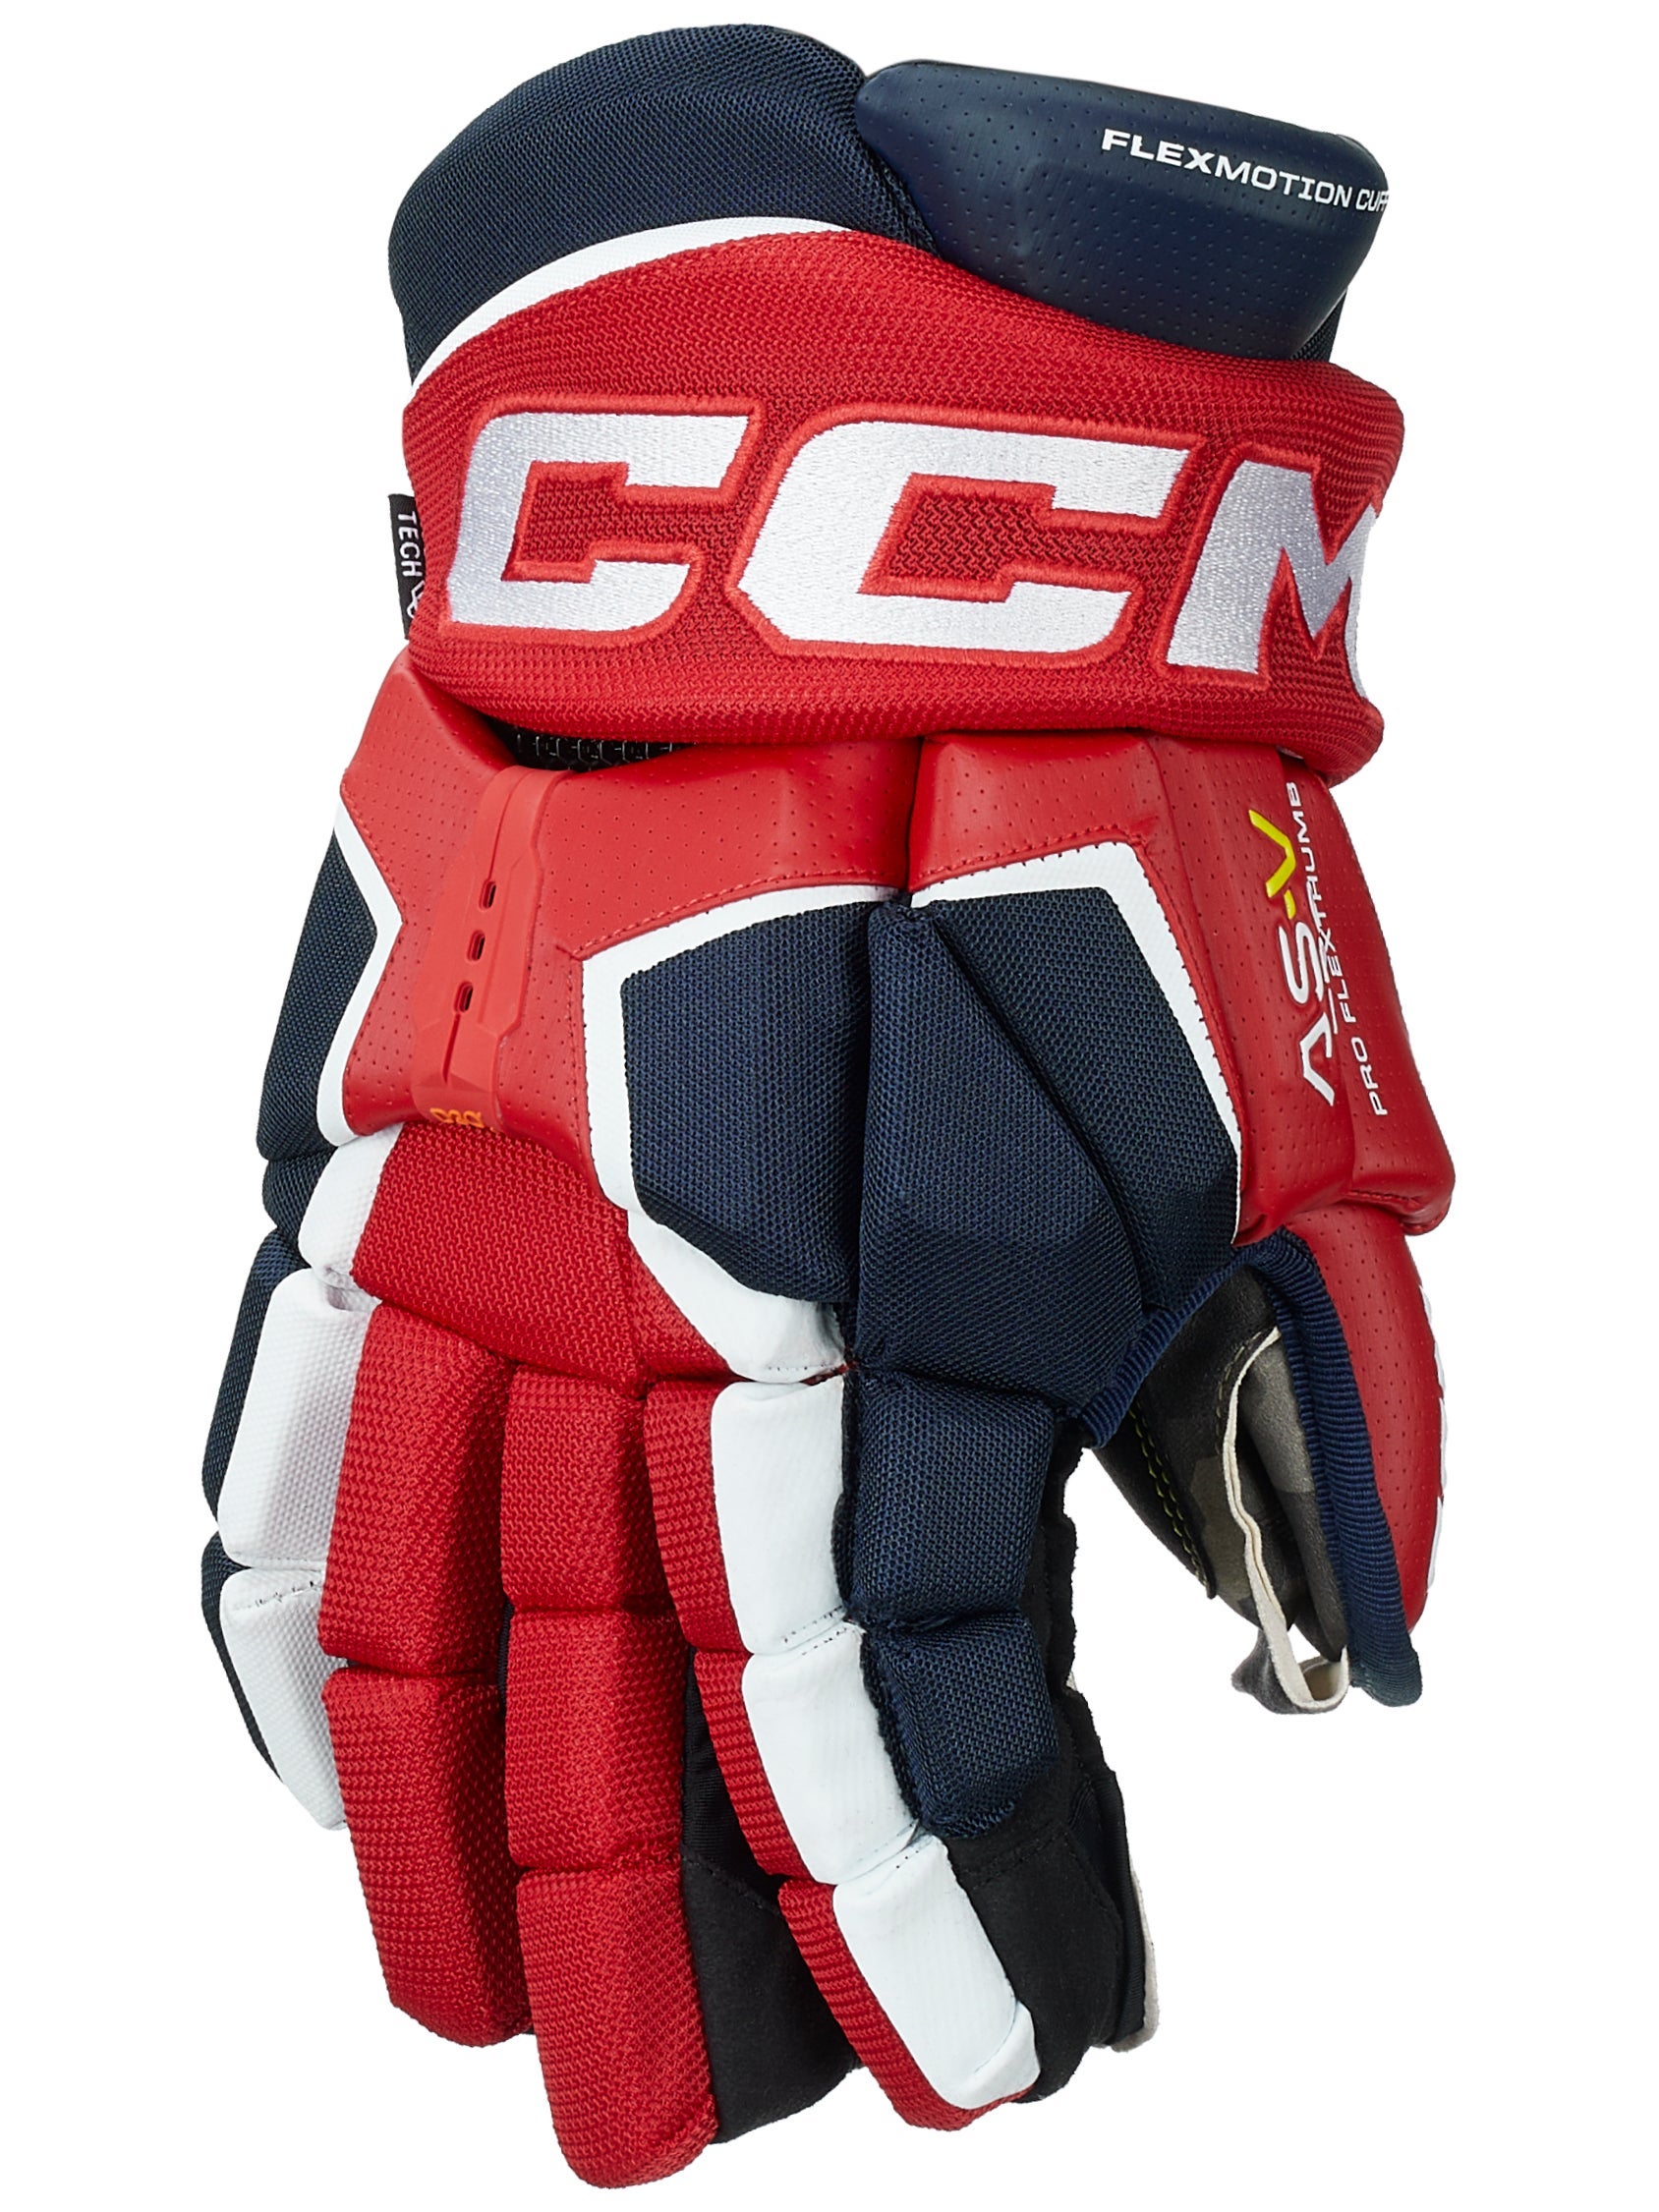 New CCM Vibe Sr ice hockey gloves Black/White 15" inch glove senior cuff roll 